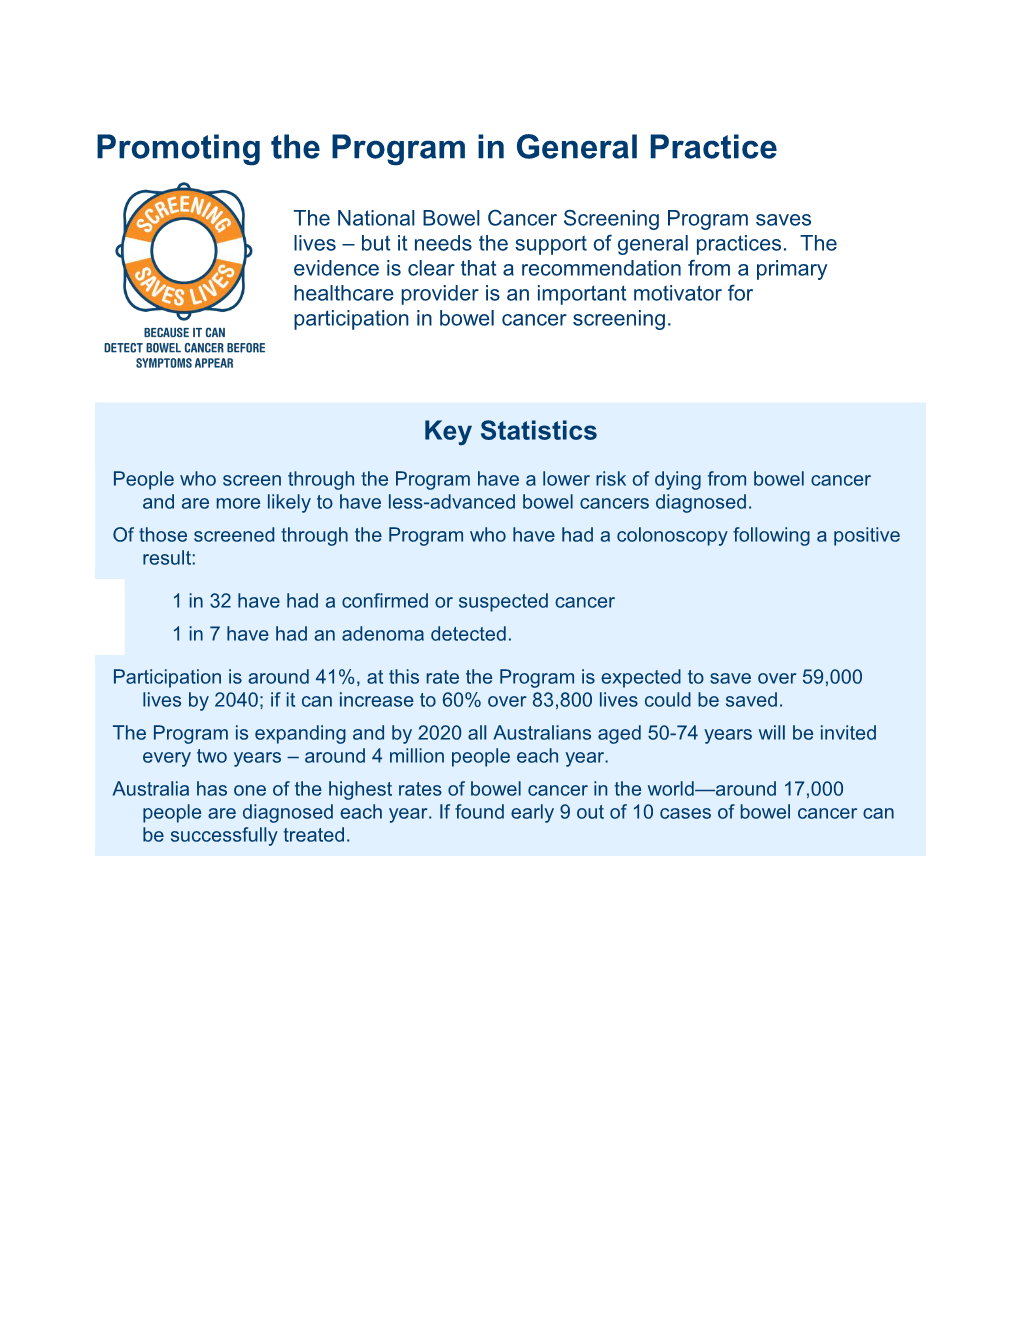 NBCSP Promoting the Program in General Practice